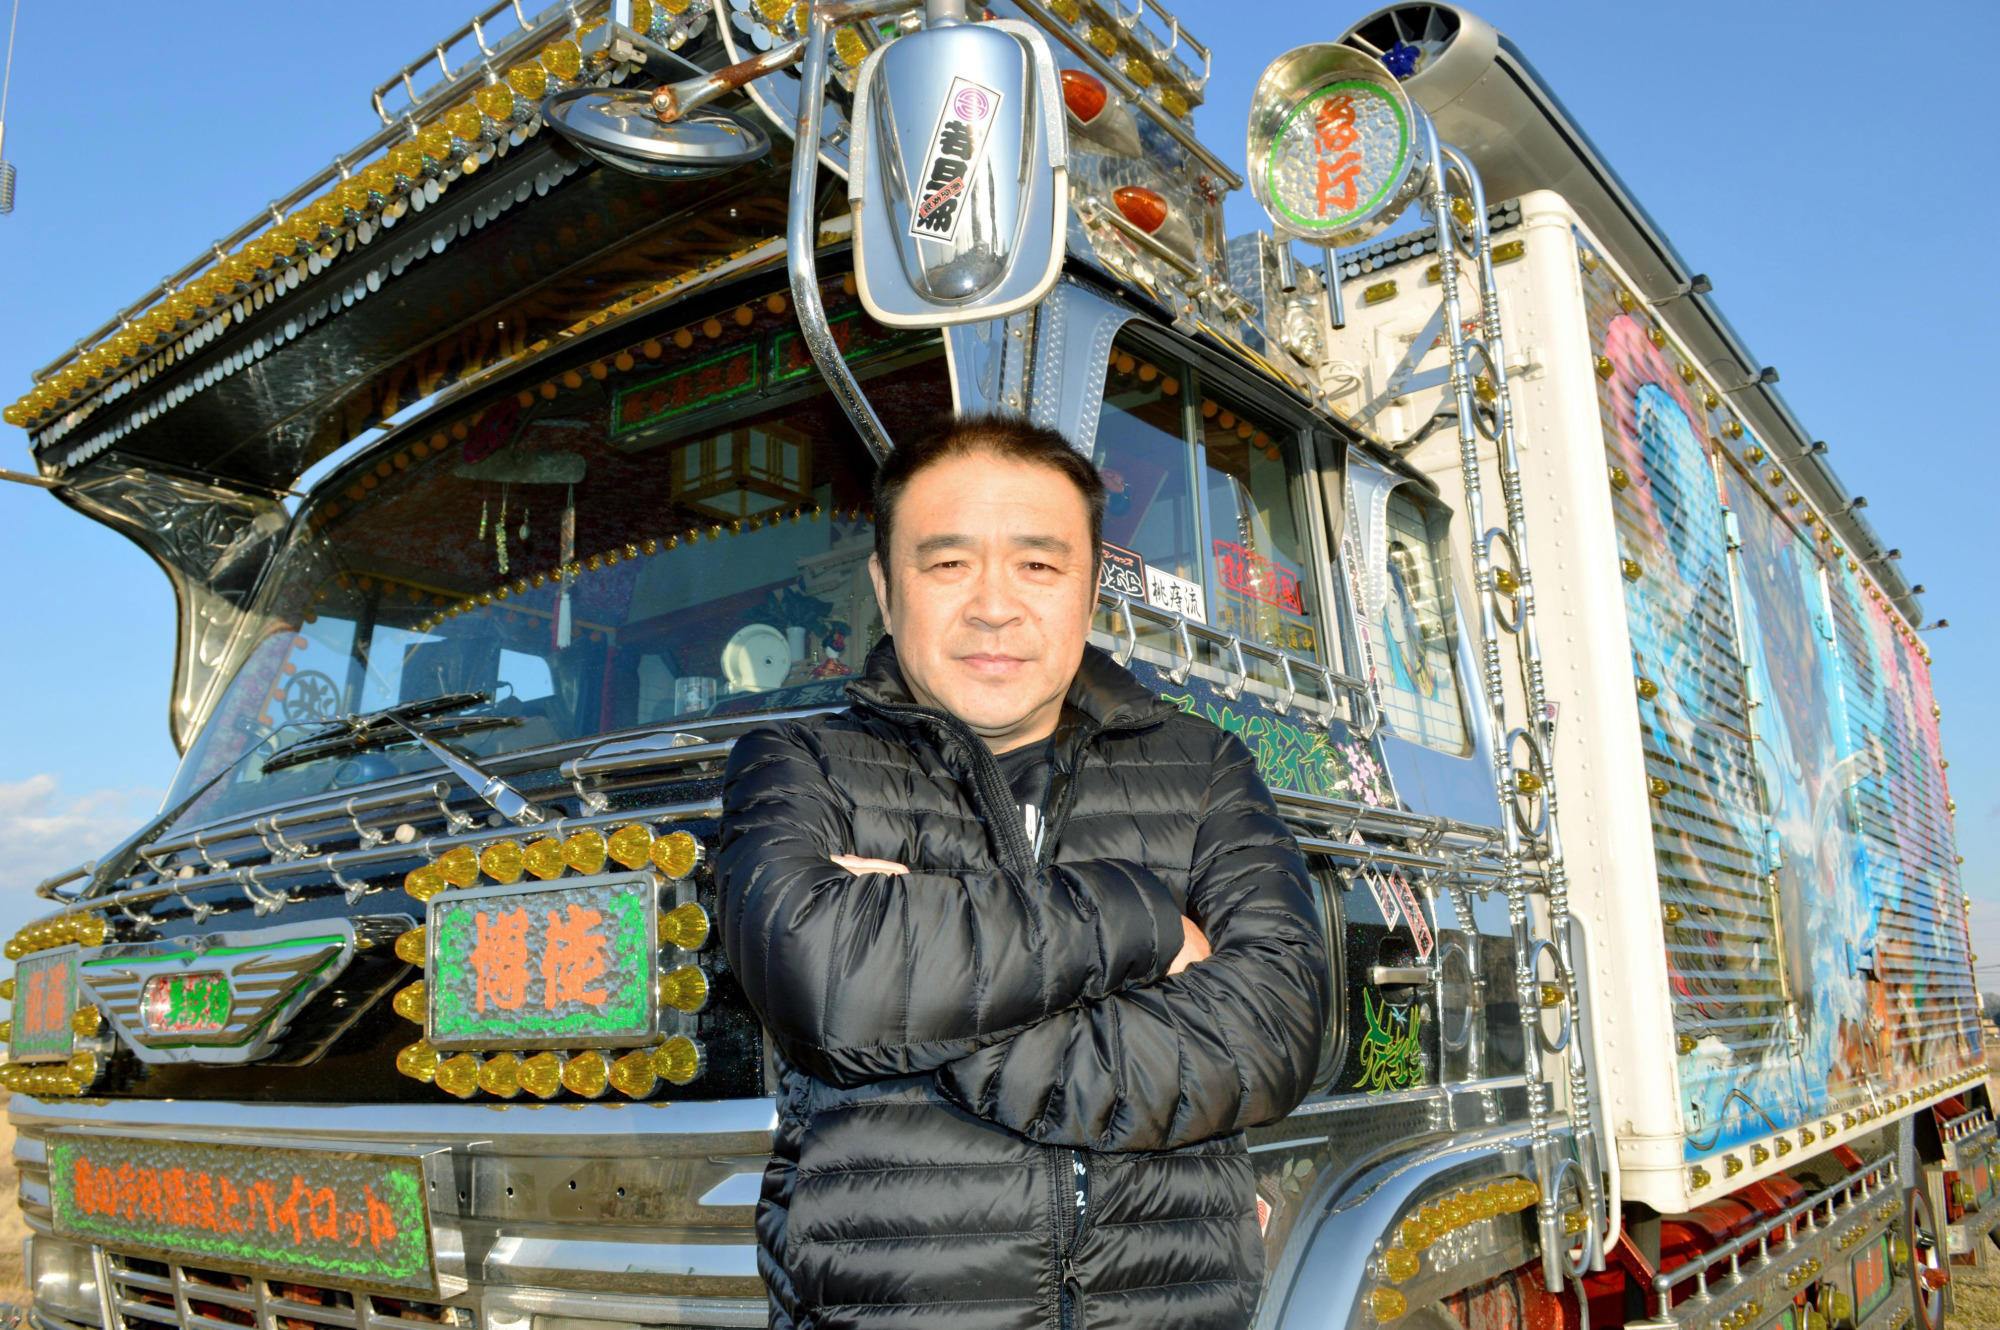 Big rig: Kazuya Sekino stands with his dekotora truck in Goka, Ibaraki Prefecture. | KYODO